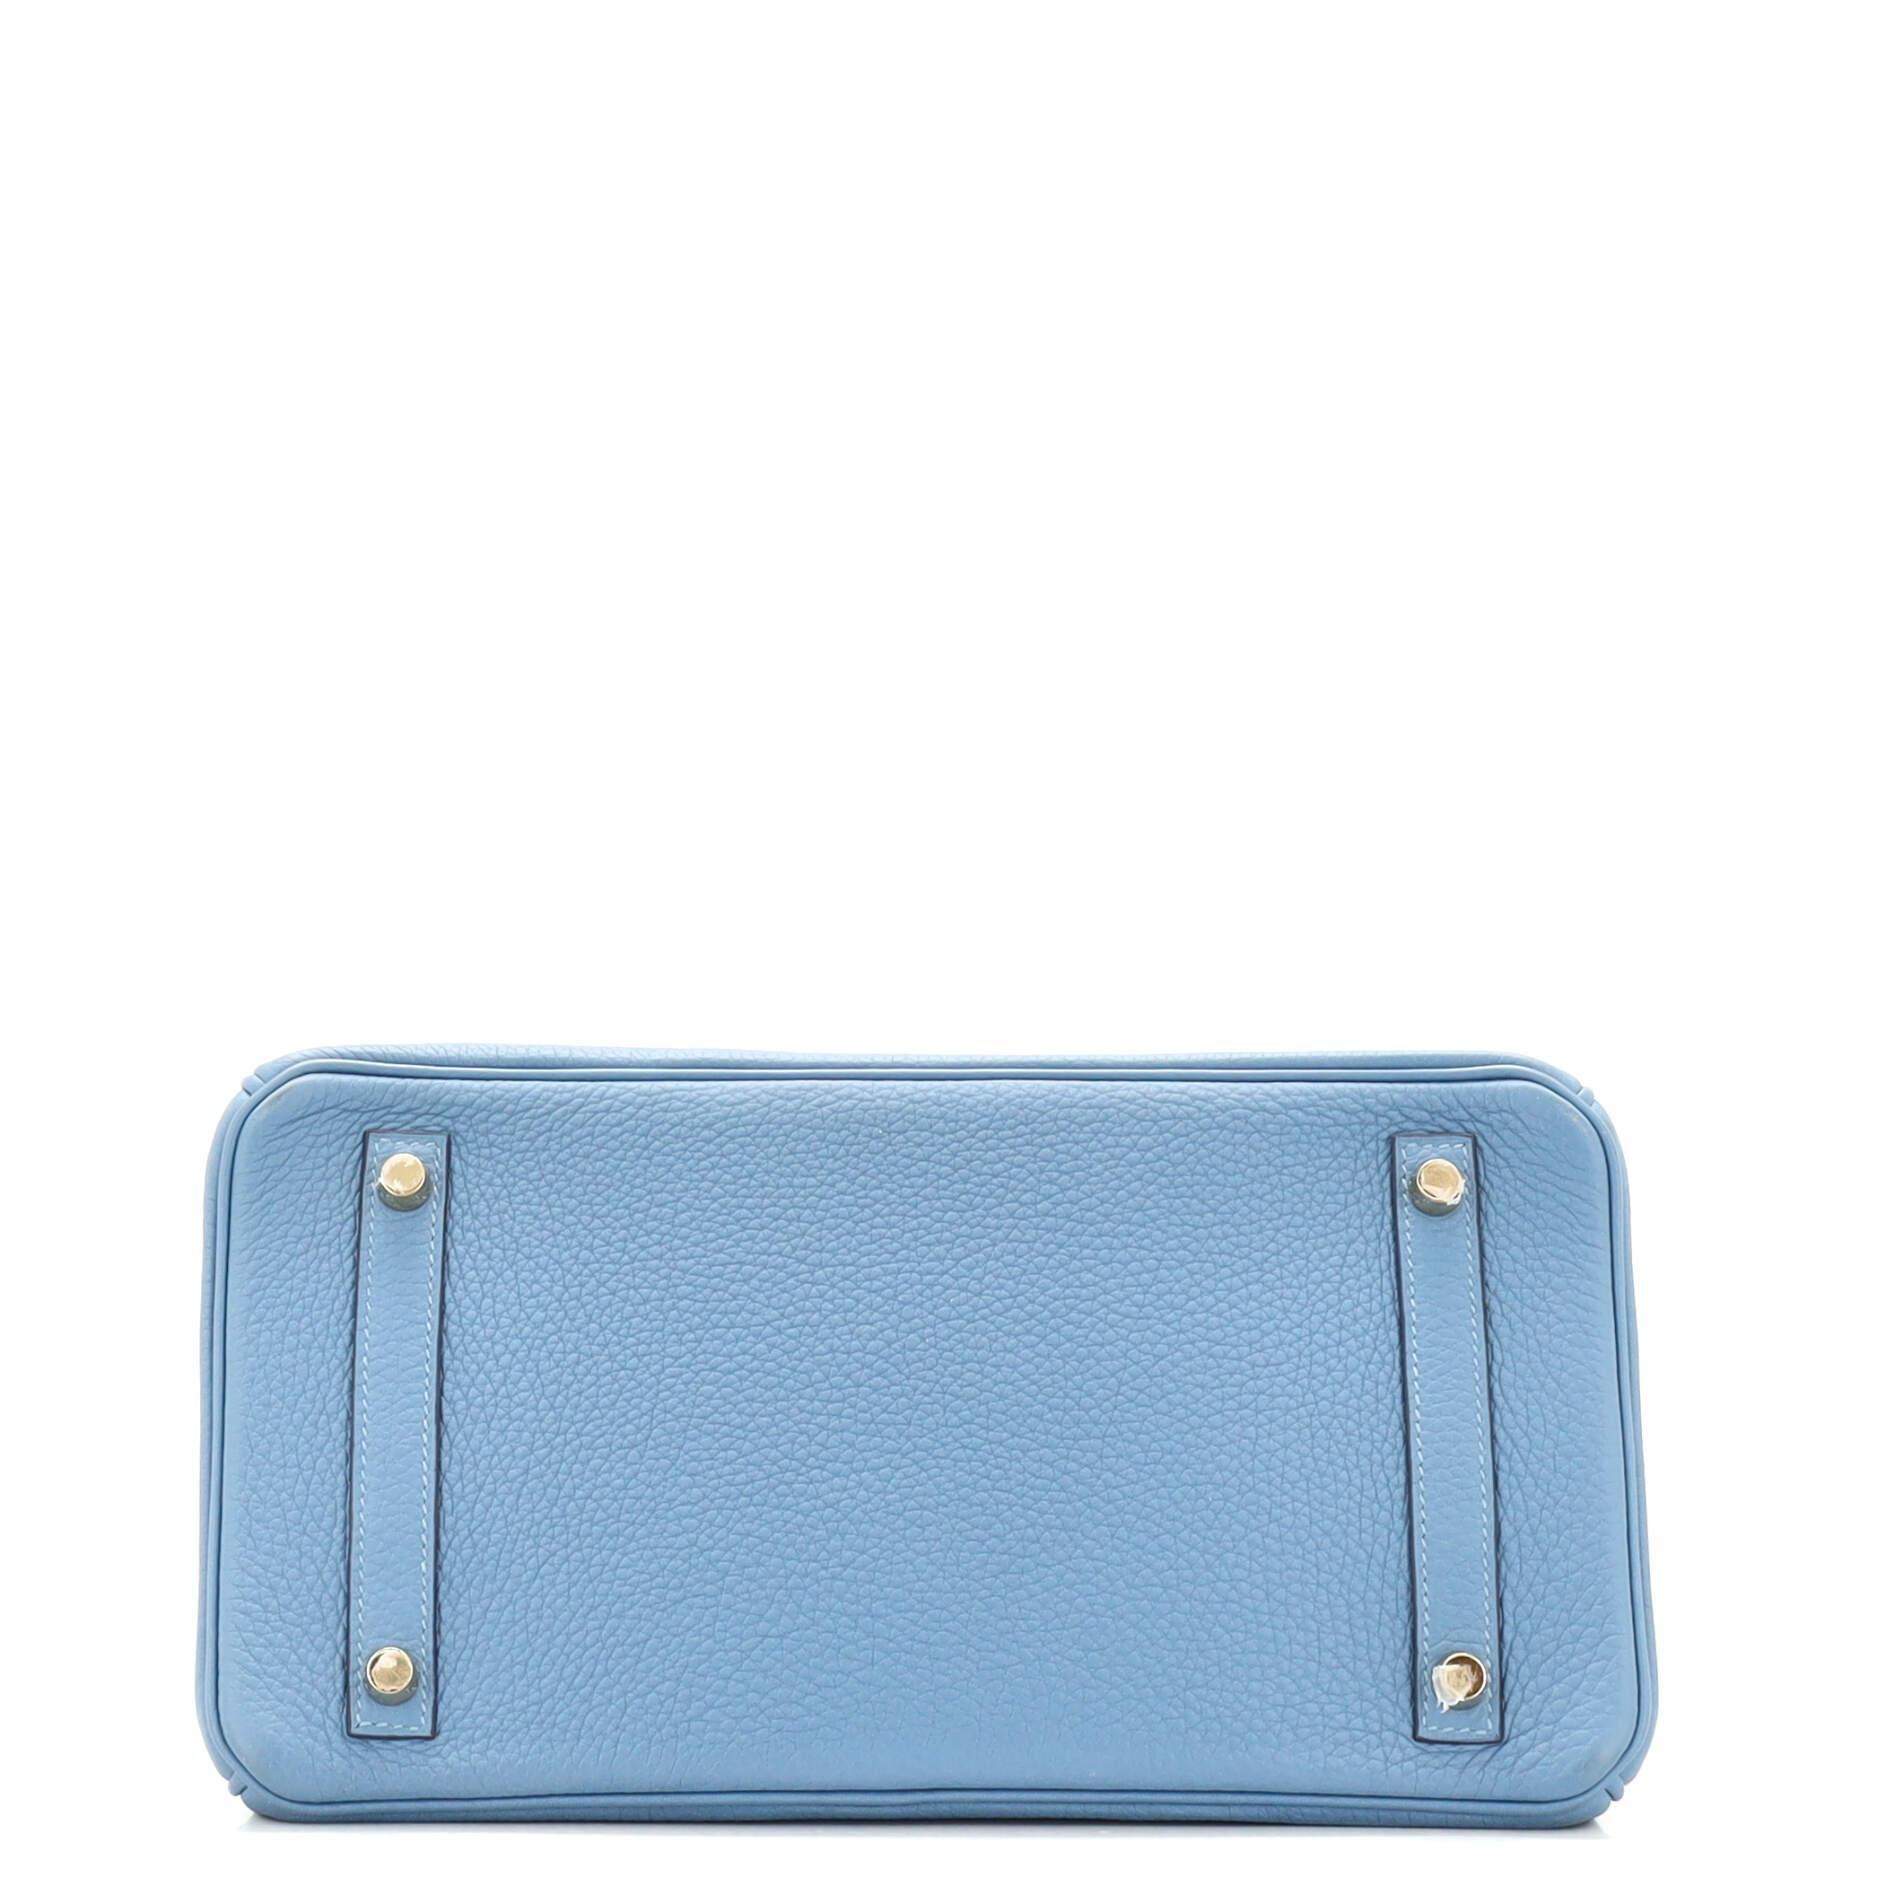 Women's or Men's Hermes Birkin Handbag Bleu Azur Togo with Gold Hardware 30